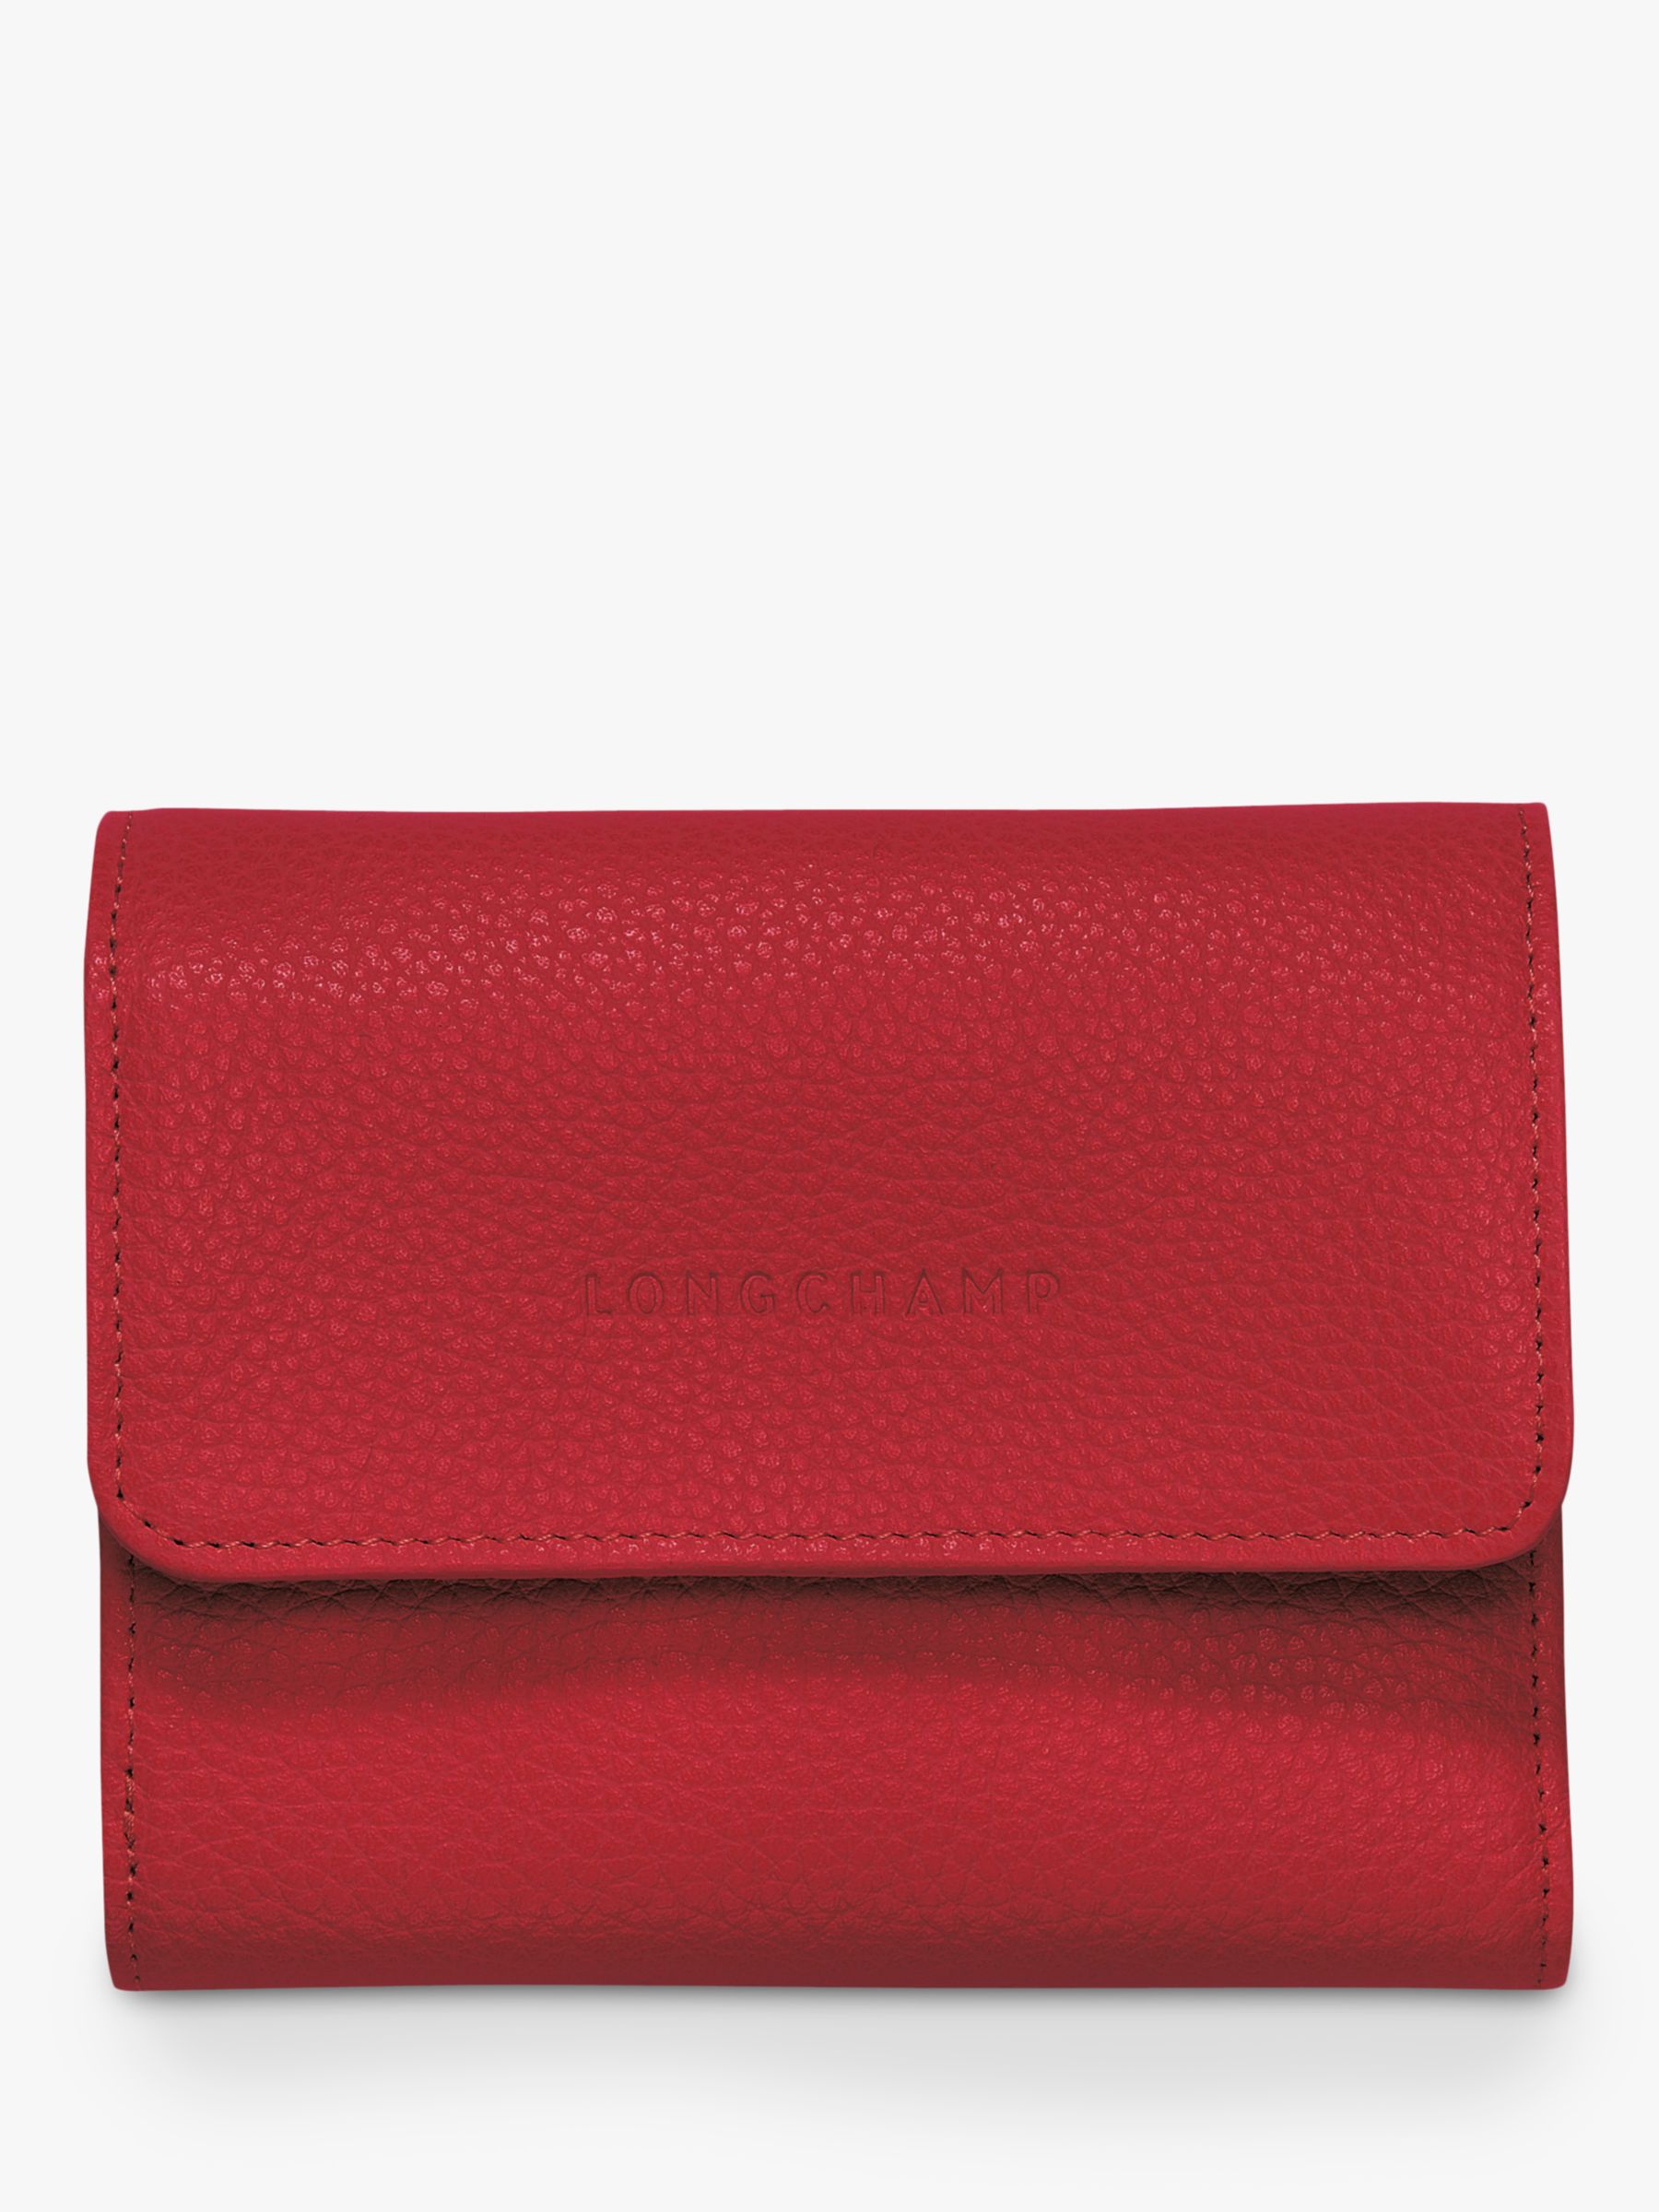 Longchamp Le Foulonné Compact Leather Wallet, Red at John Lewis & Partners